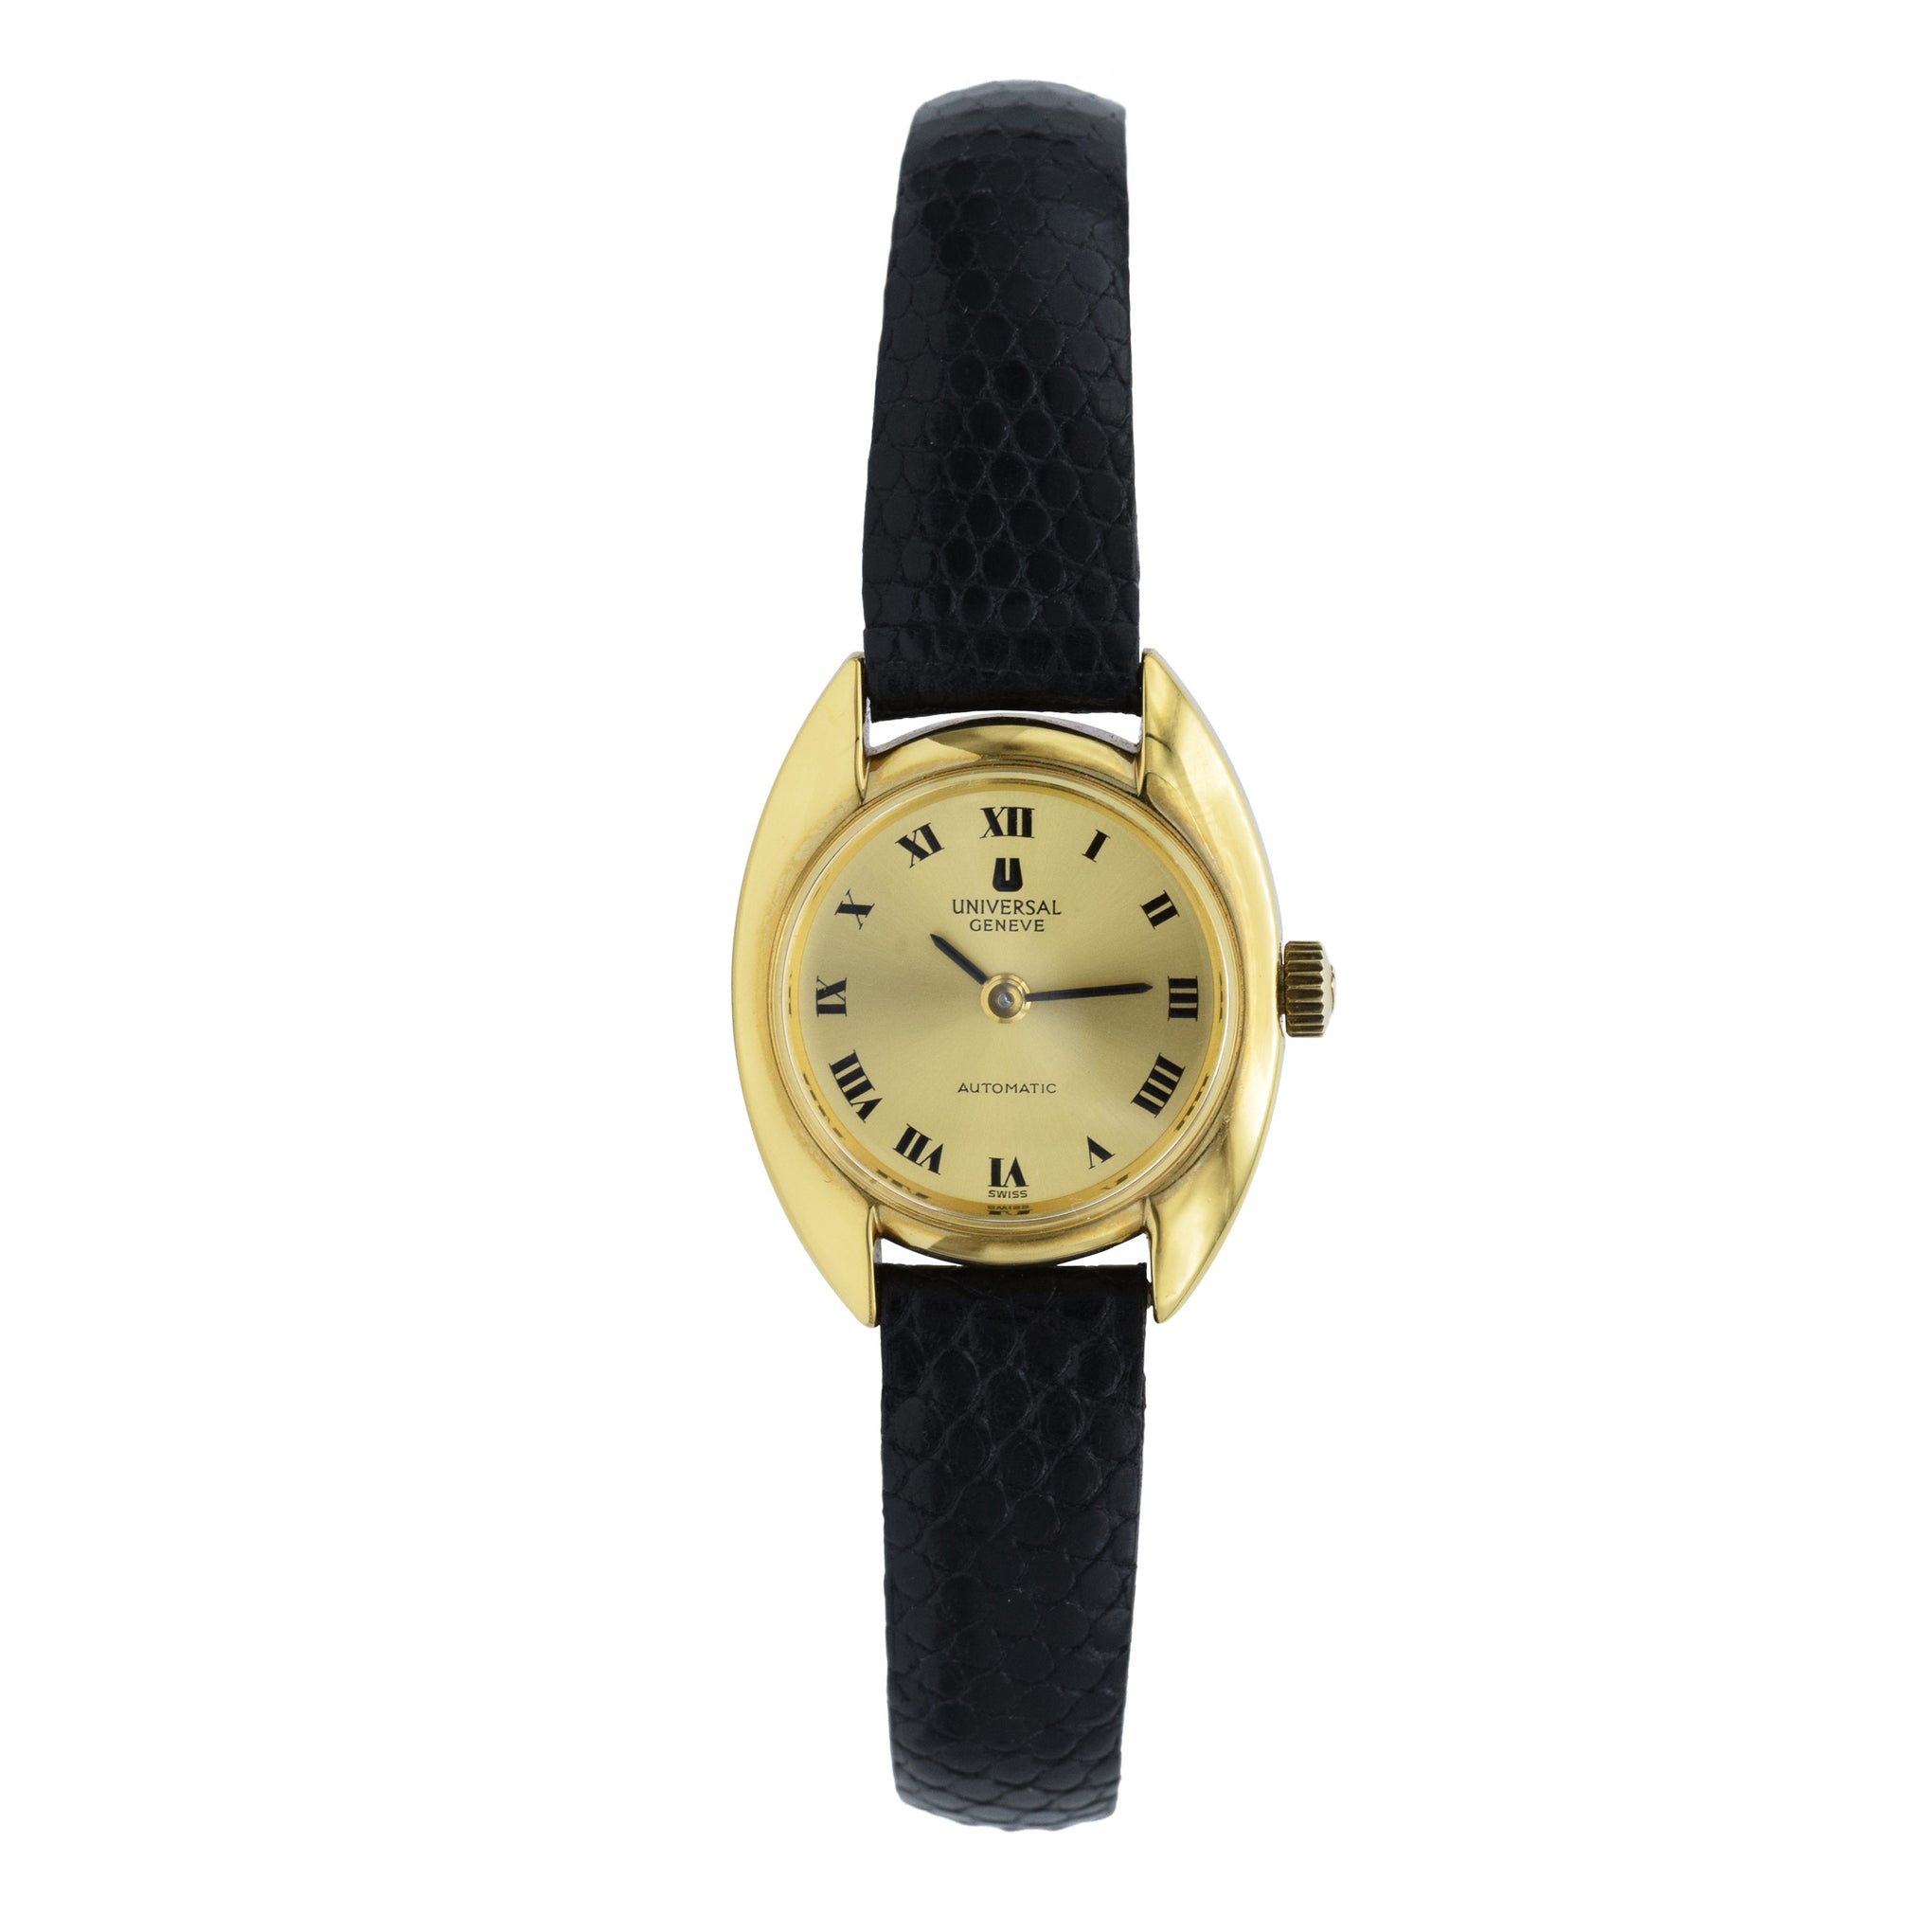 Vintage 1970s Universal Genève Watch